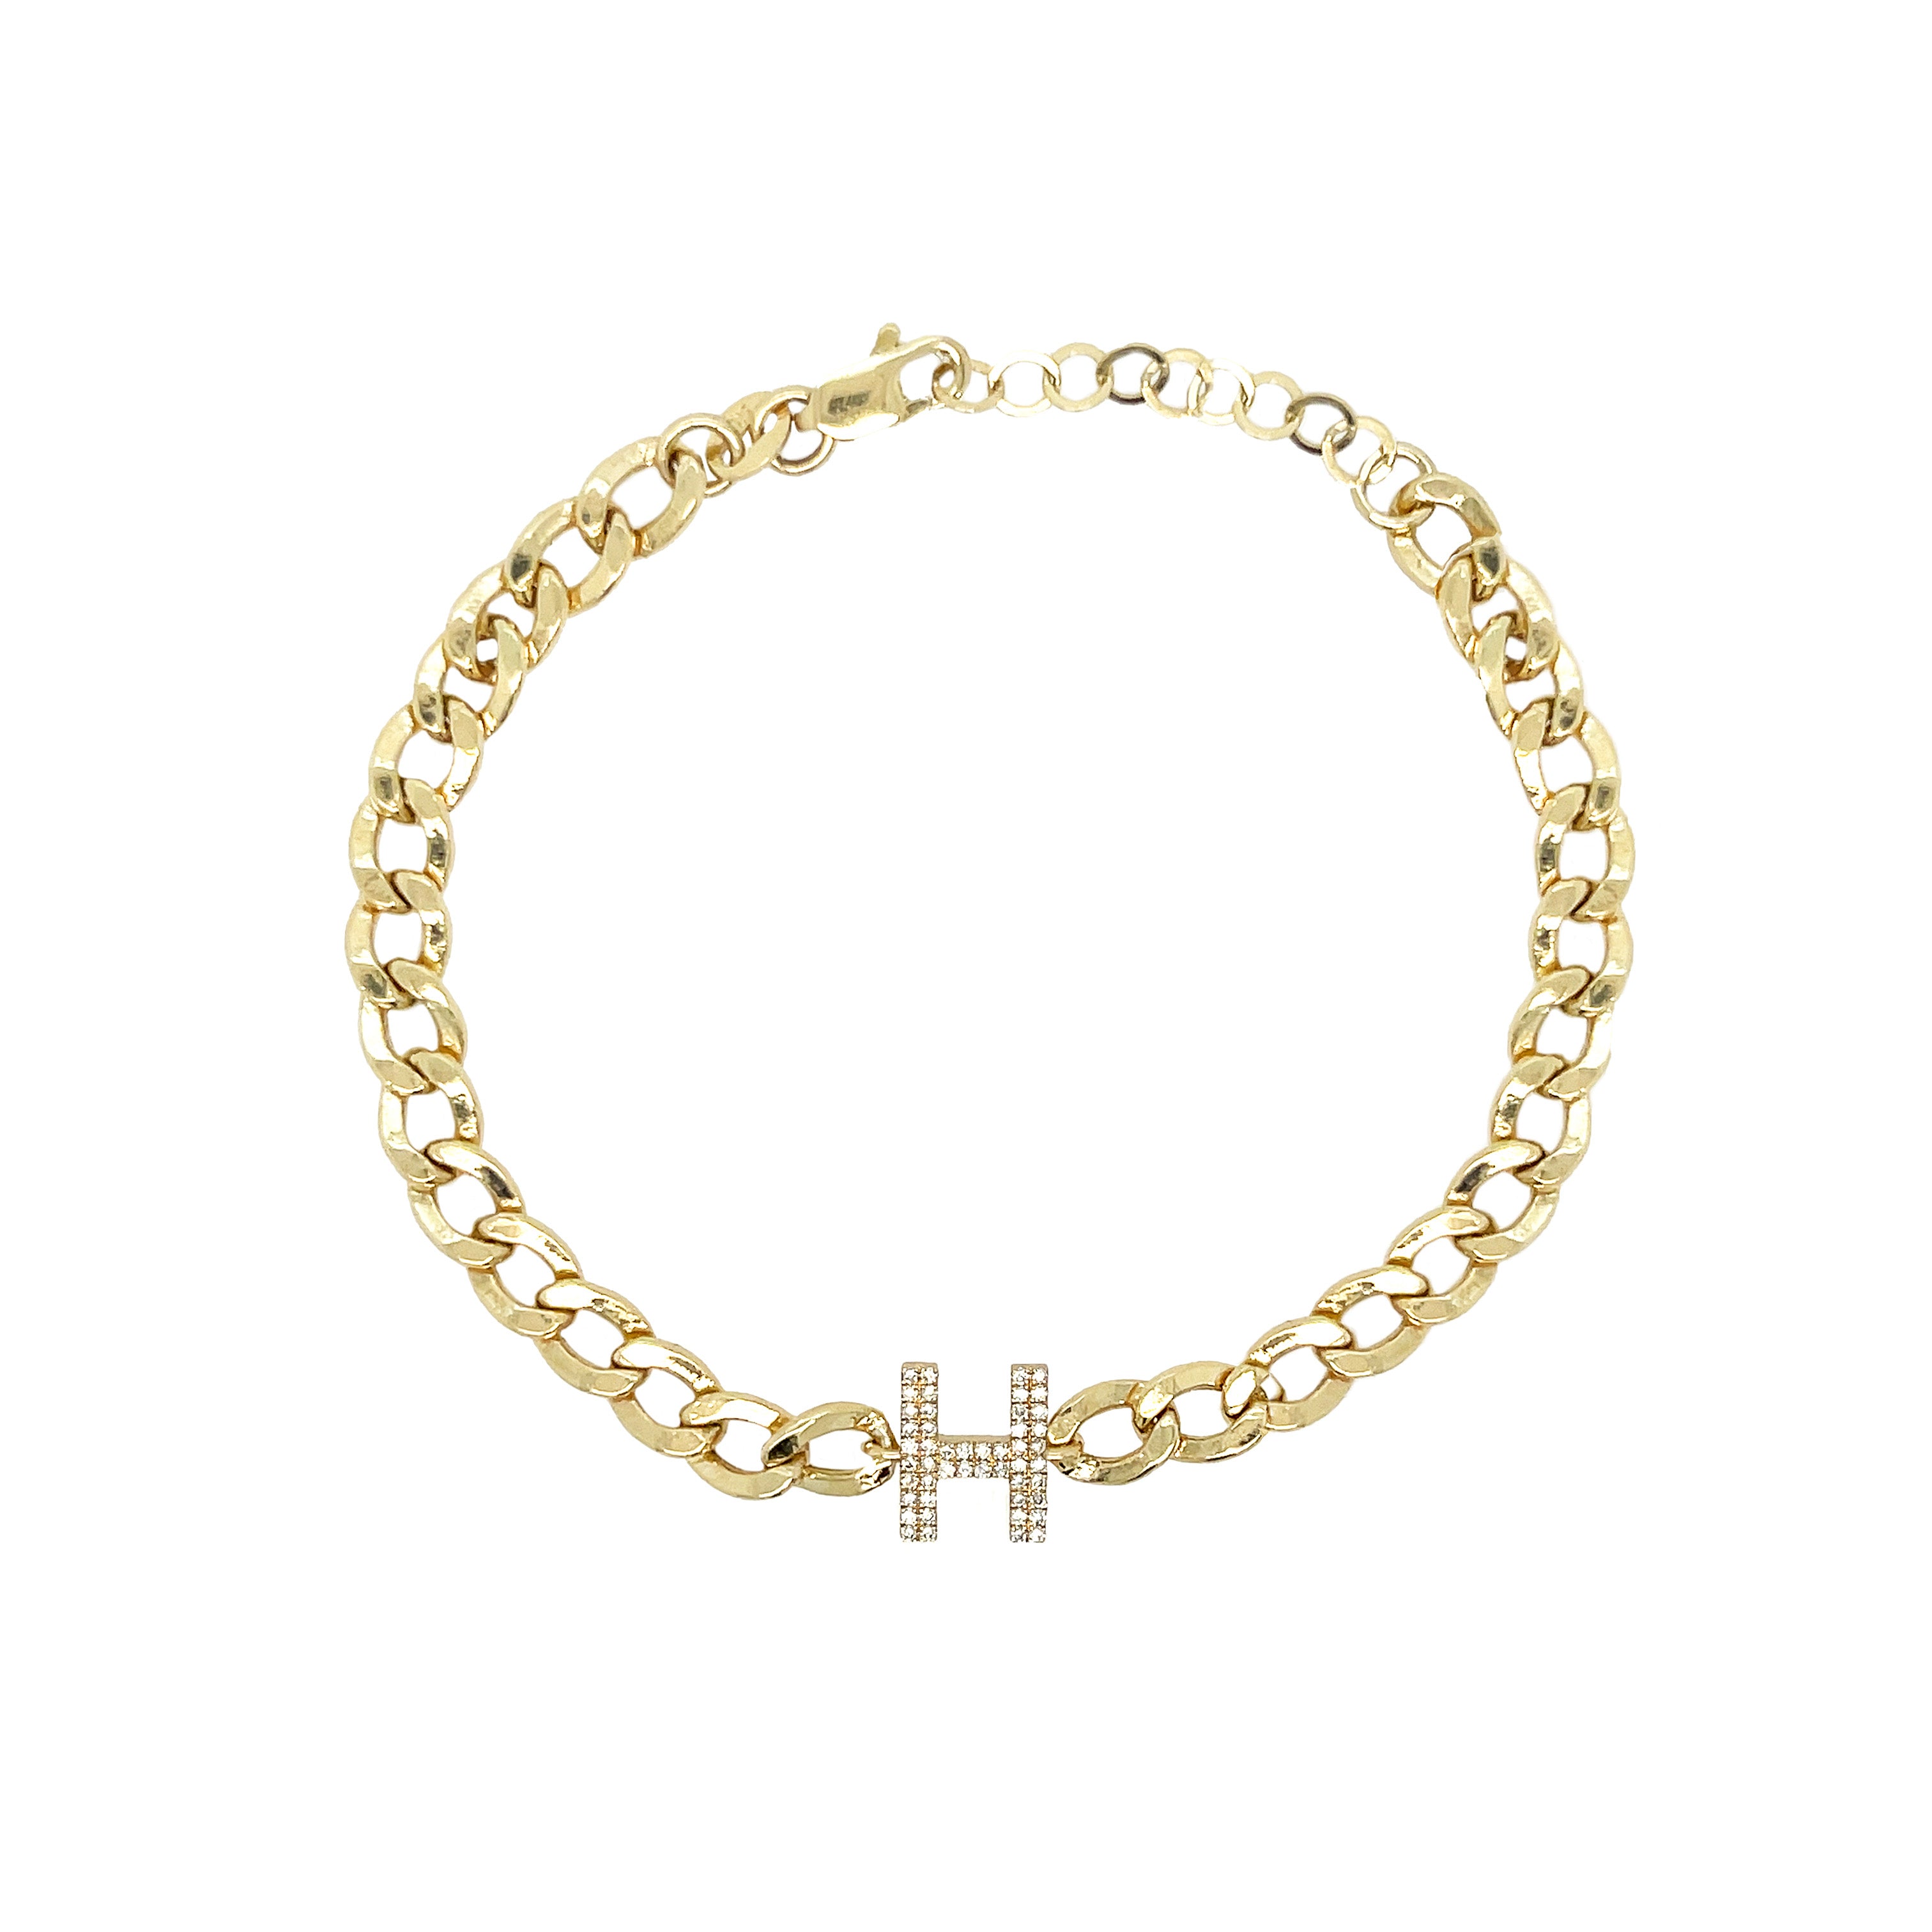 If & Co. 14K White Gold Cuban Link Bracelet